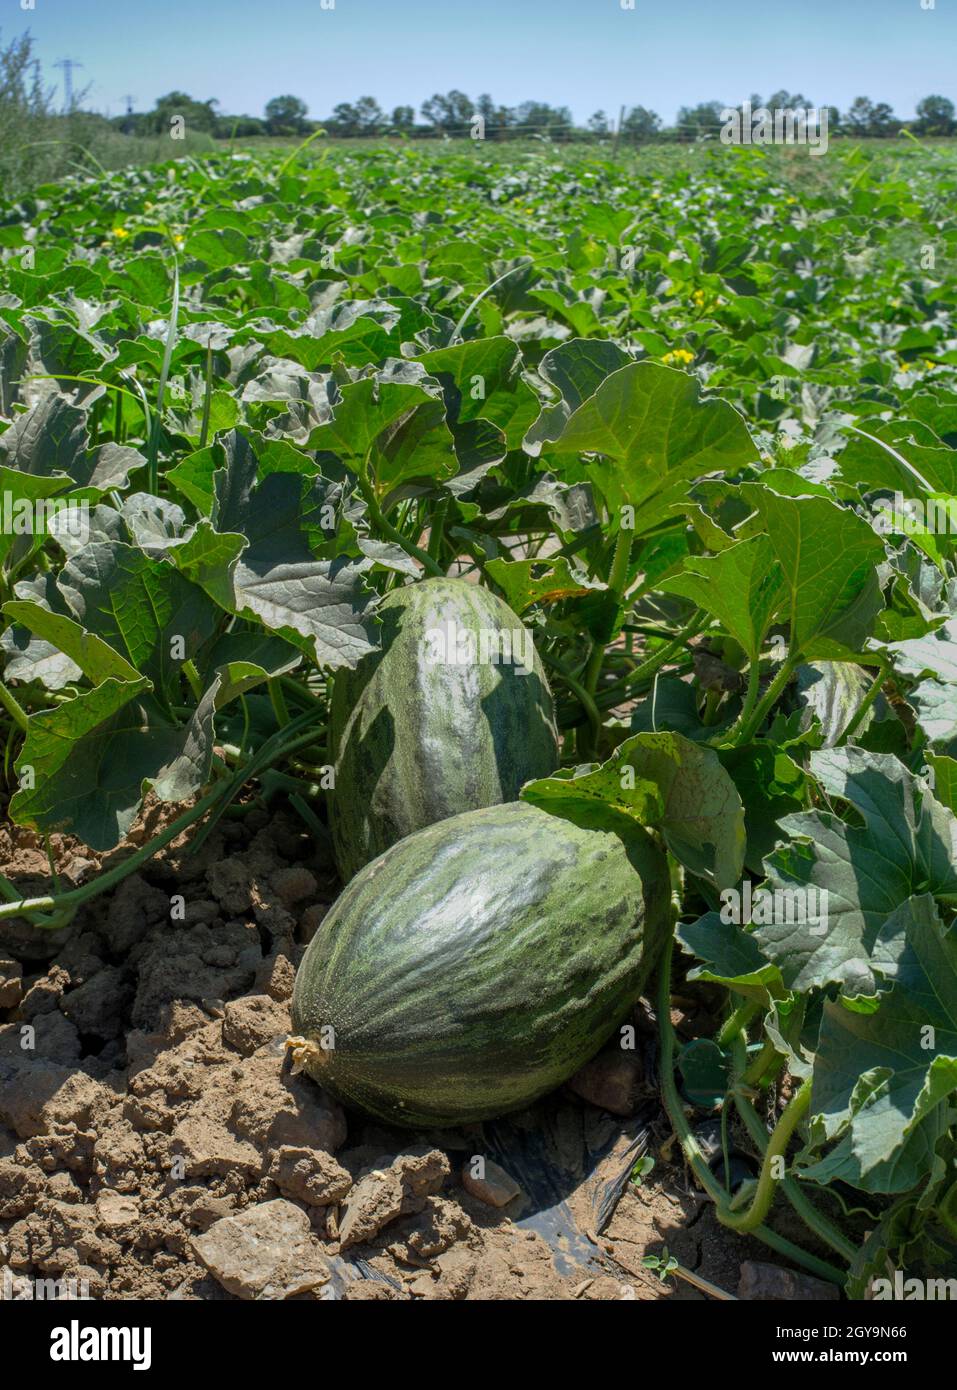 Santa Claus melon or Piel de Sapo melon cultivation. Ground view Stock Photo